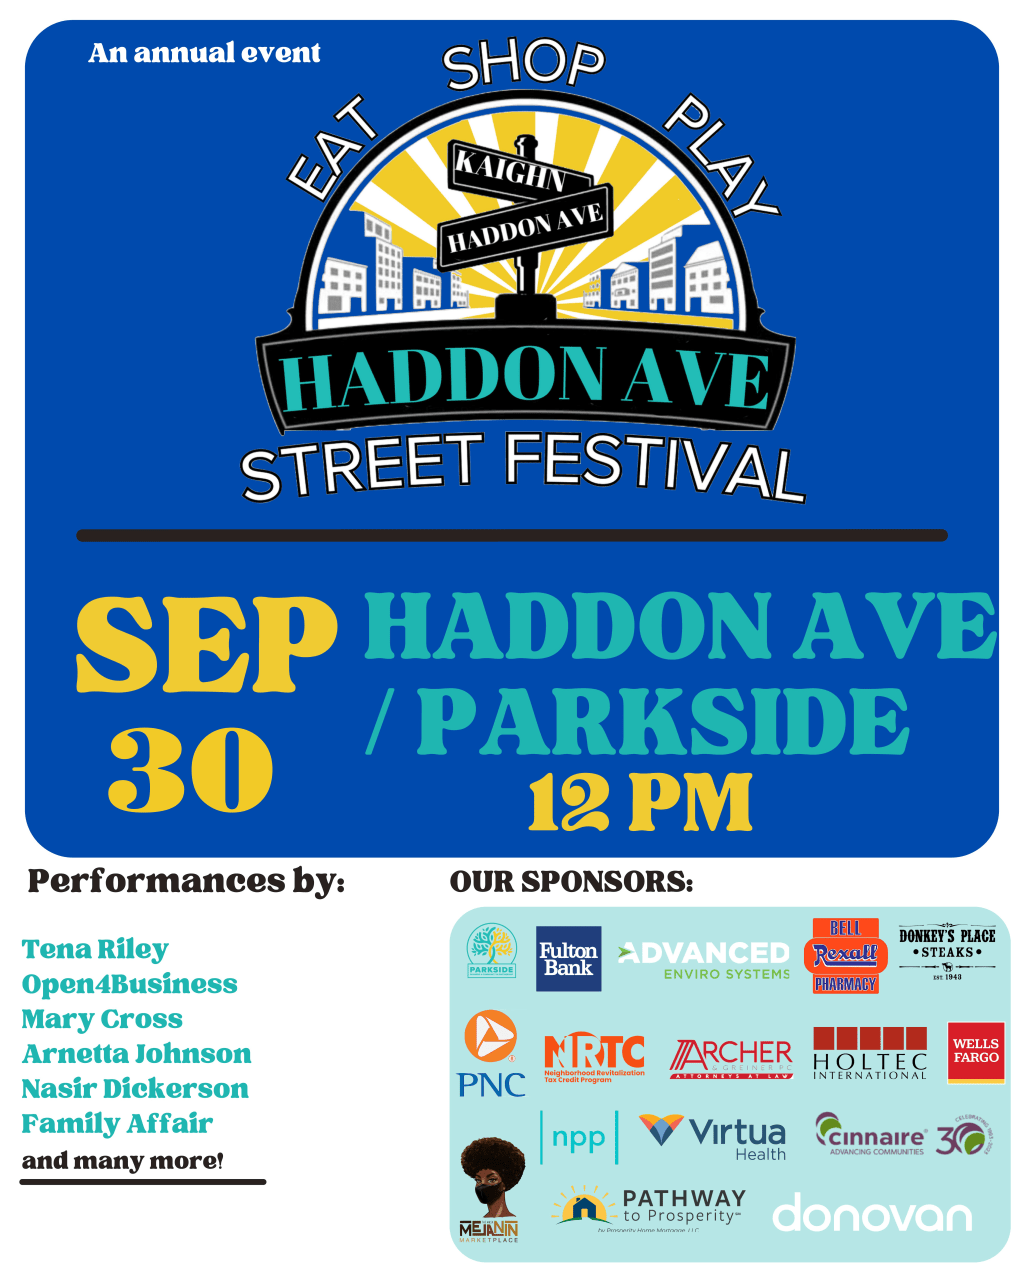 Haddon Ave street festival